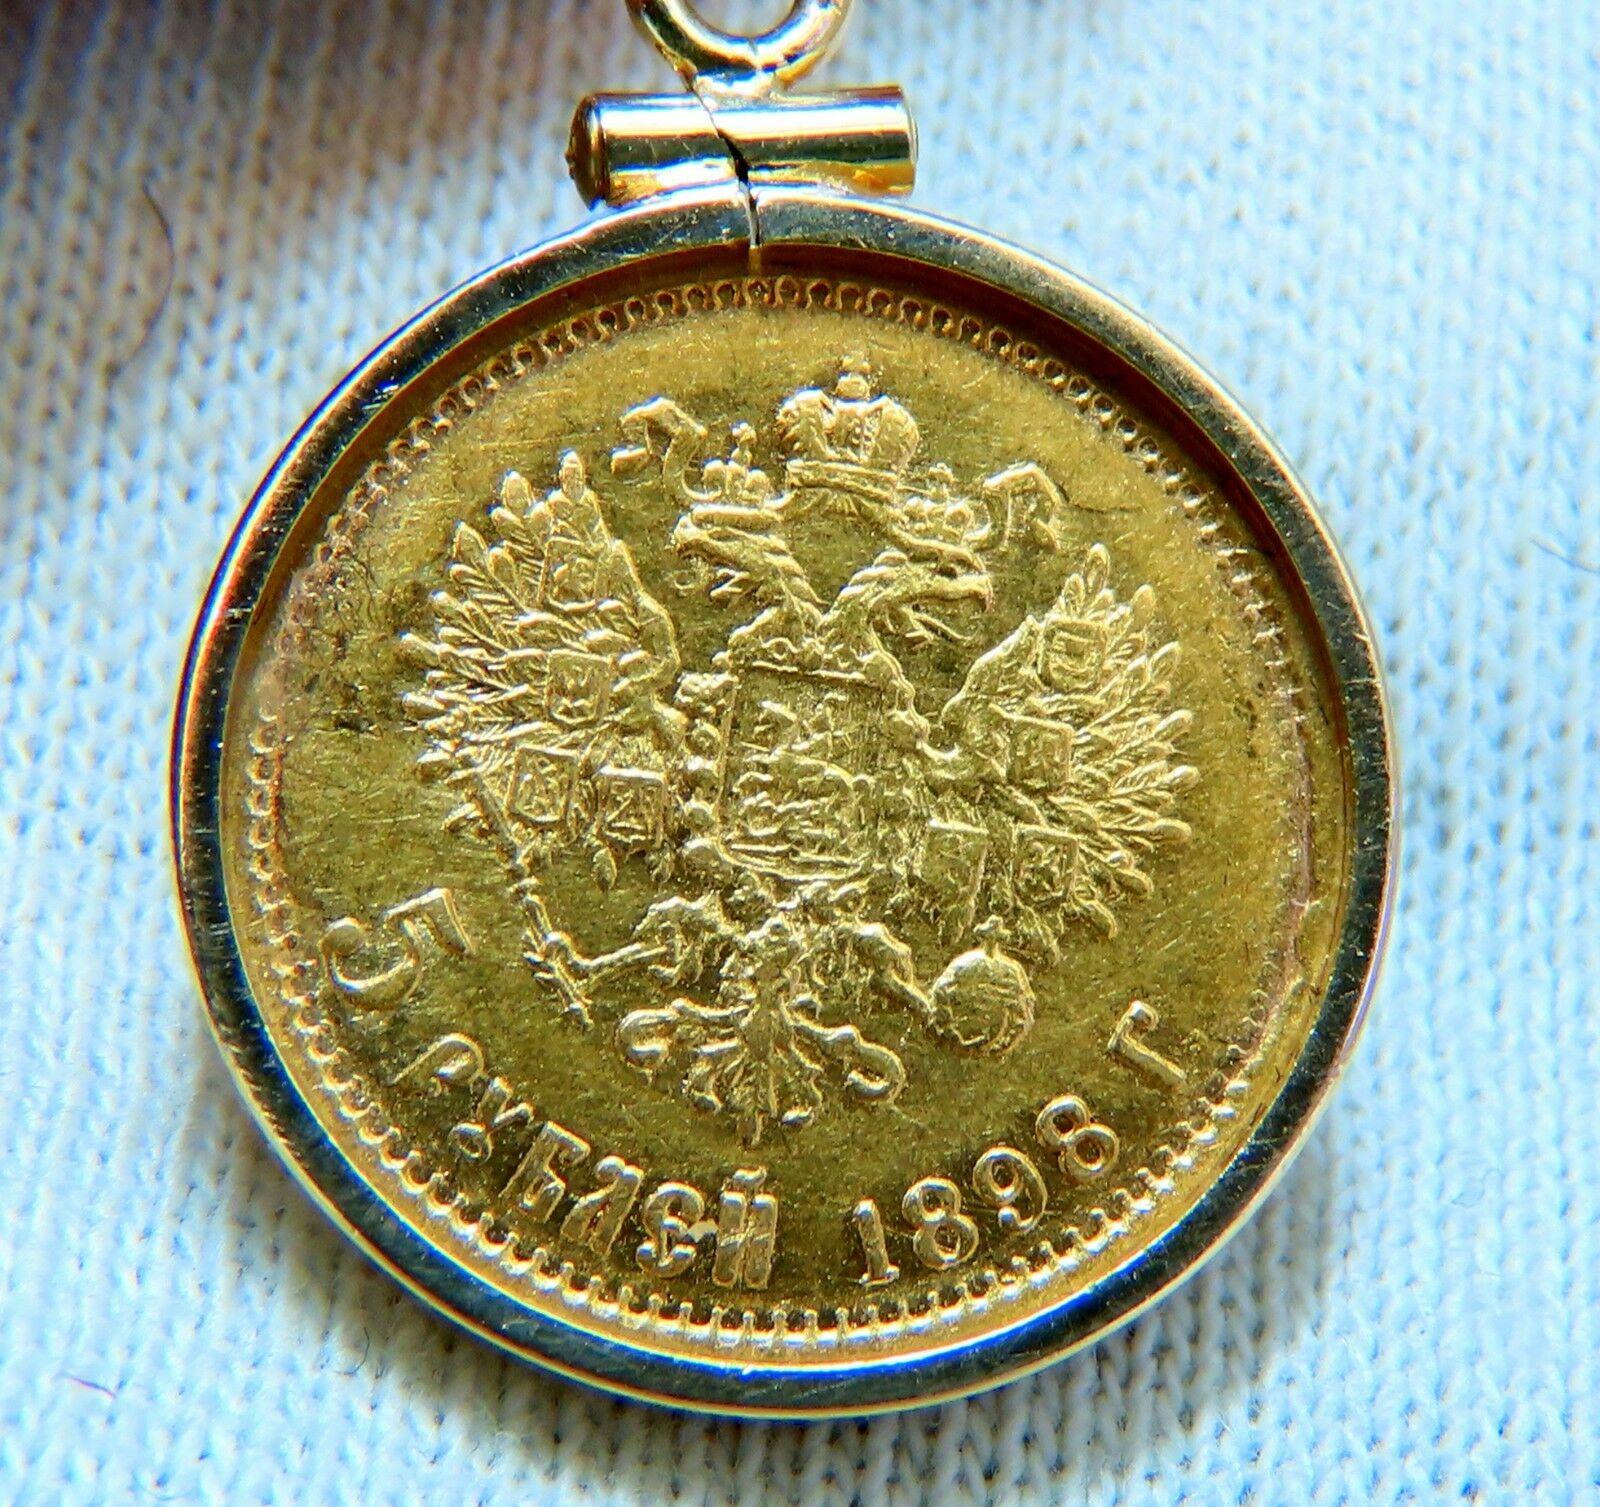 5 Ducat.

22kt 1898 Austrian Coin Pendant

14kt. Handmade Frame

Grand total weight: 
7.9 grams
Measures:

19mm diameter

17.5 inch necklace.